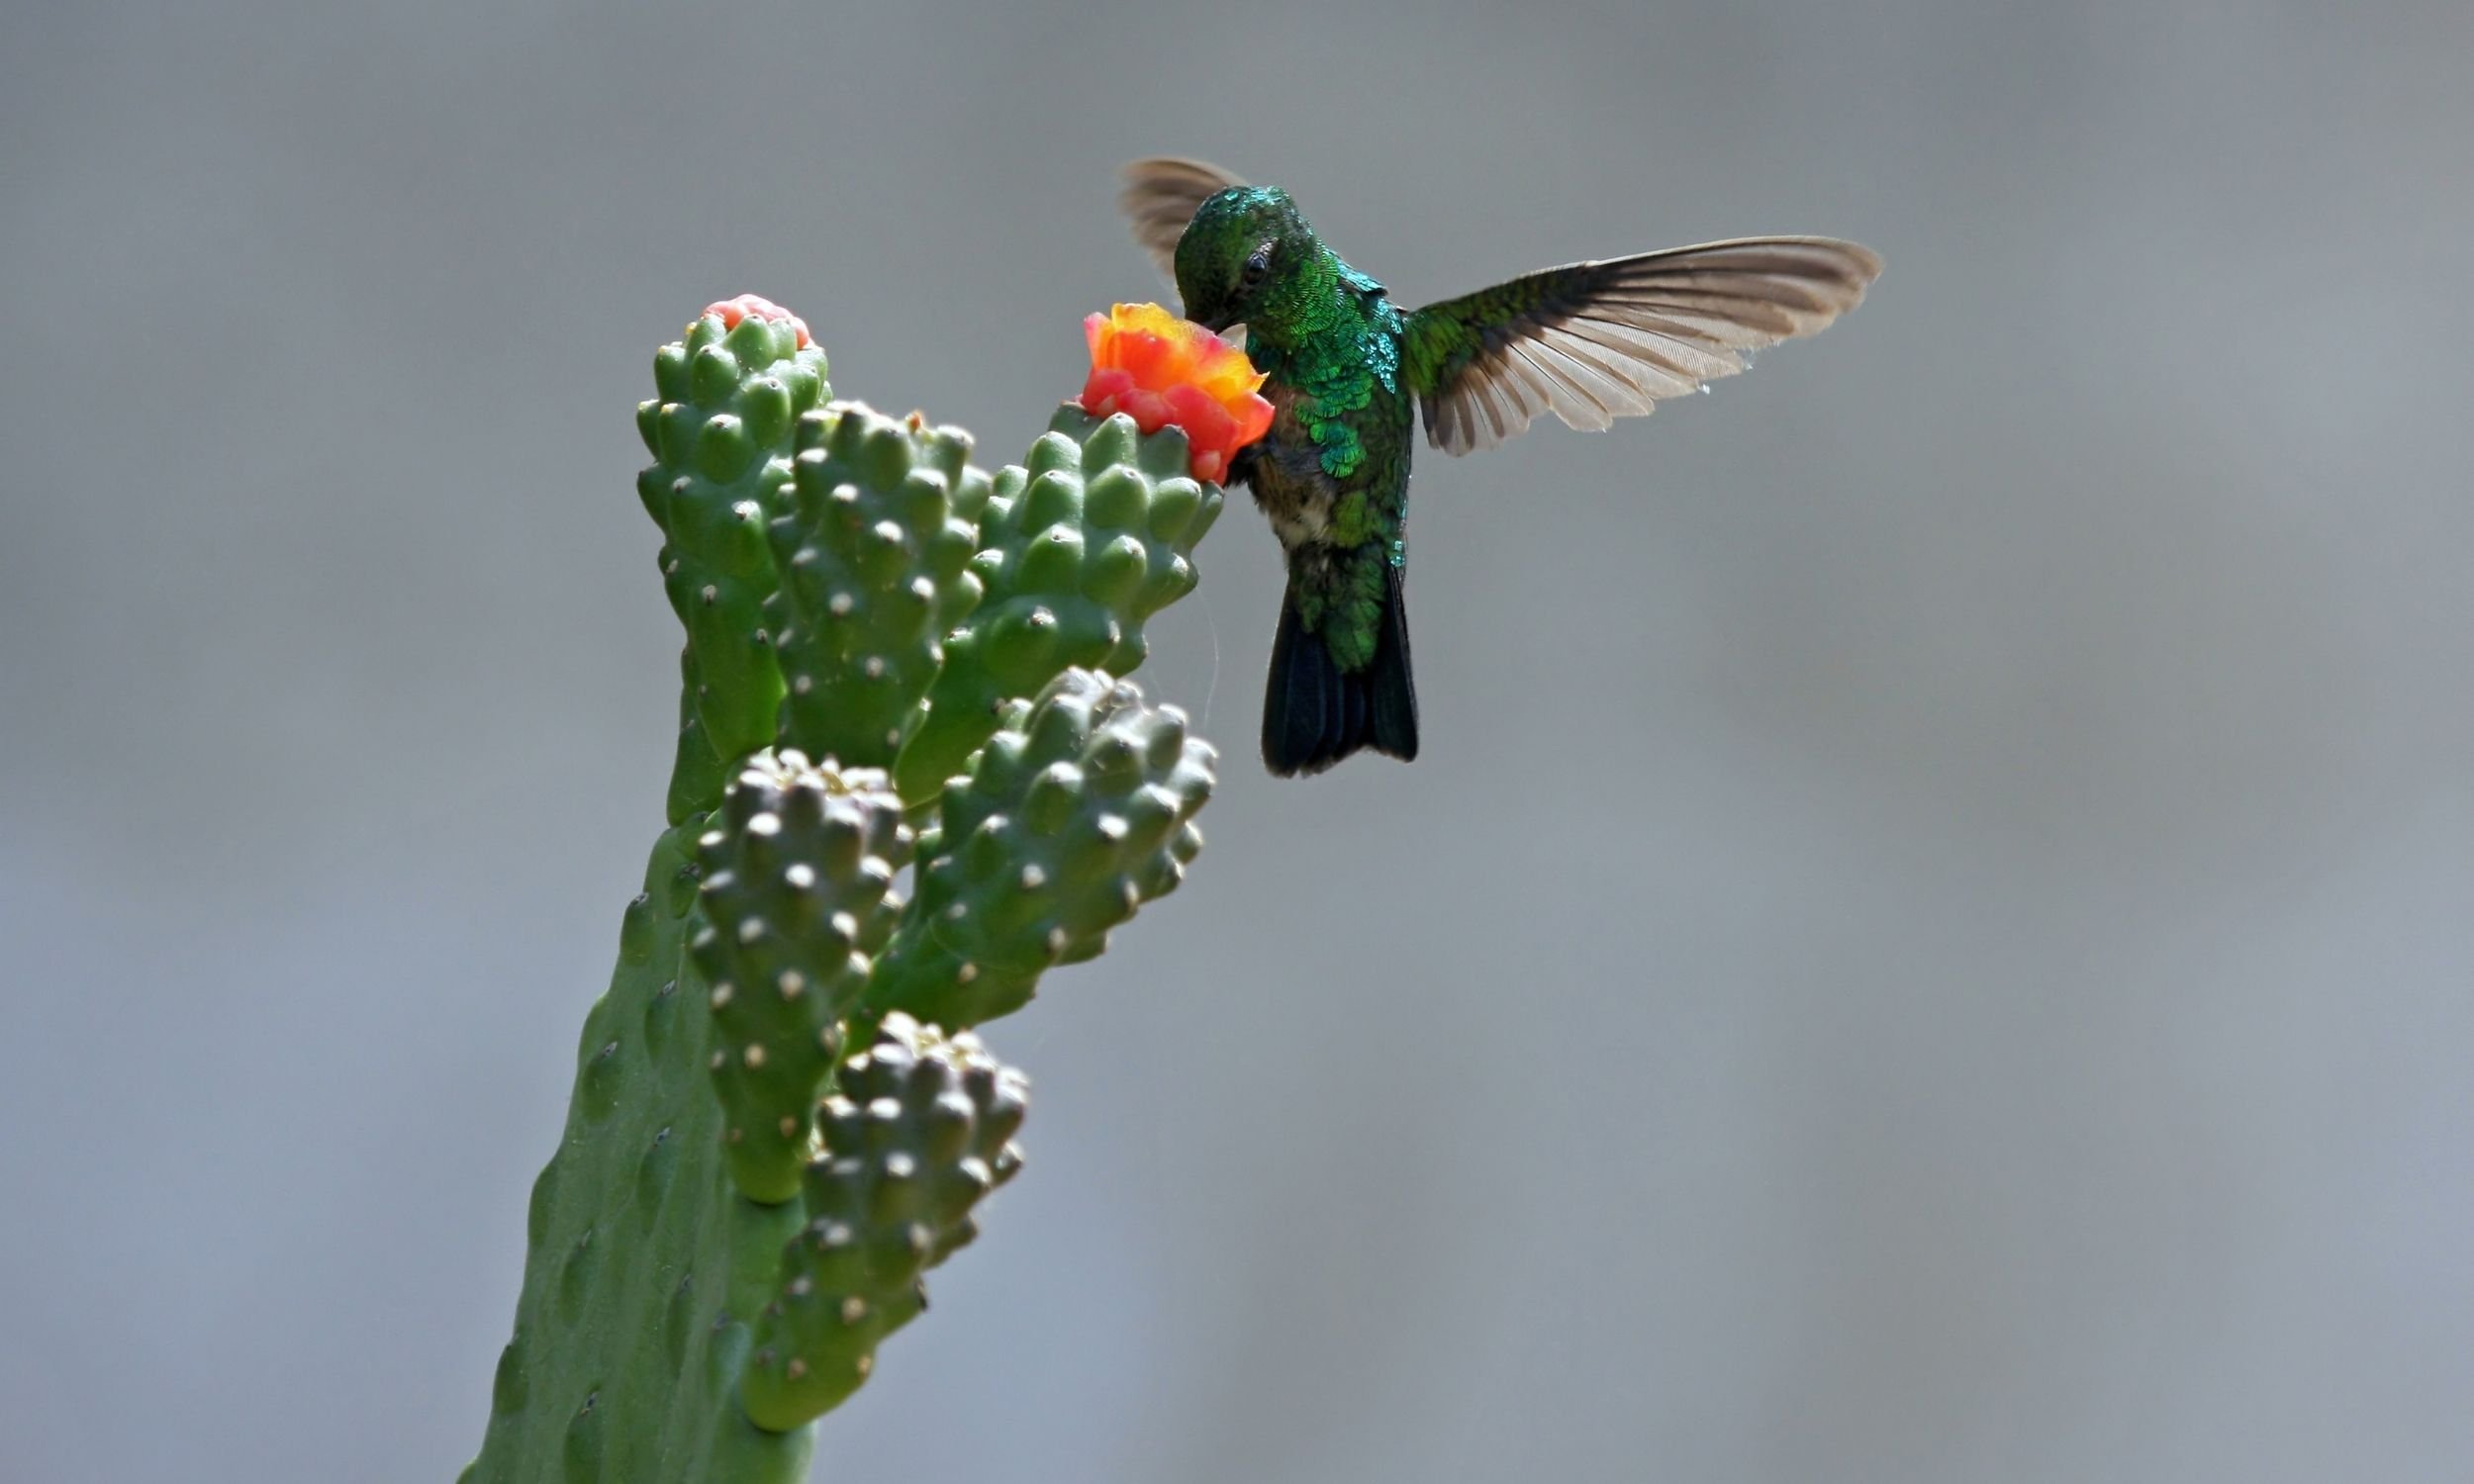 hummingbird on an orange catucs flower